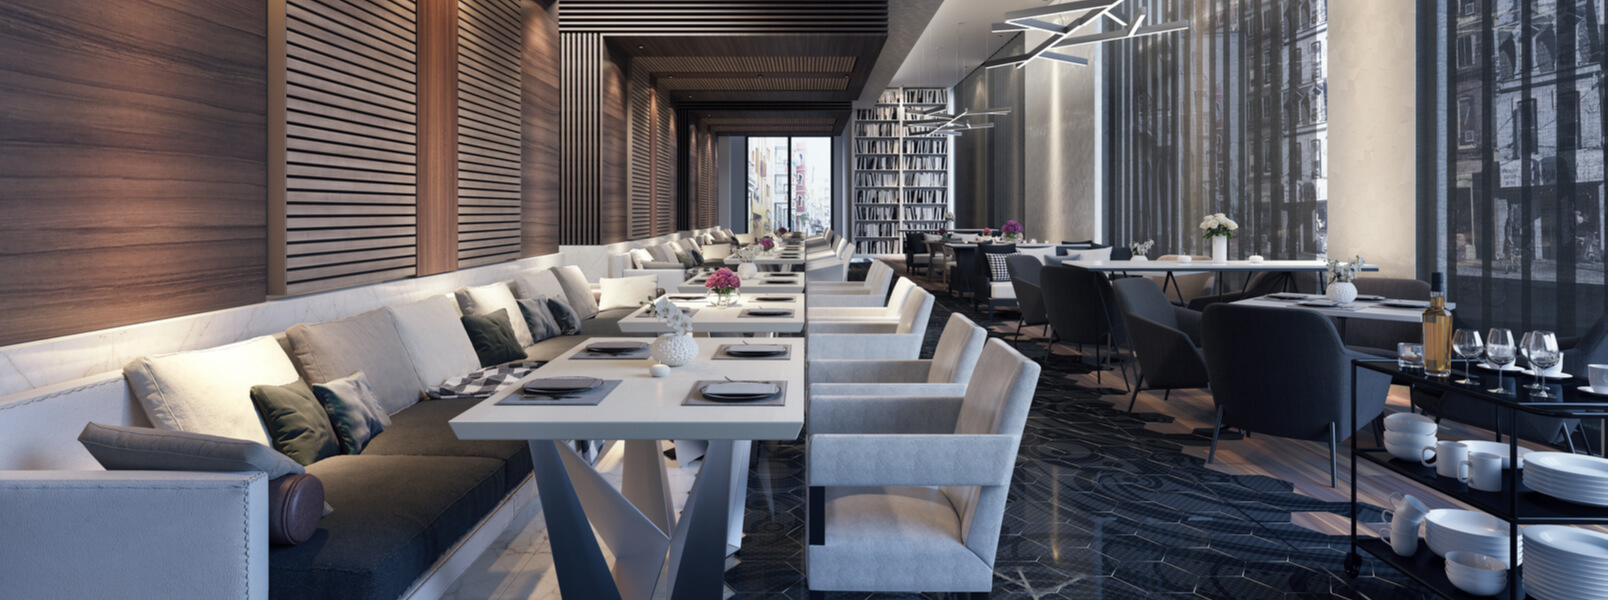 23 Of The Most Instagrammable Blue Restaurants Around The World  Bar  interior design, Luxury restaurant interior, Restaurant interior design